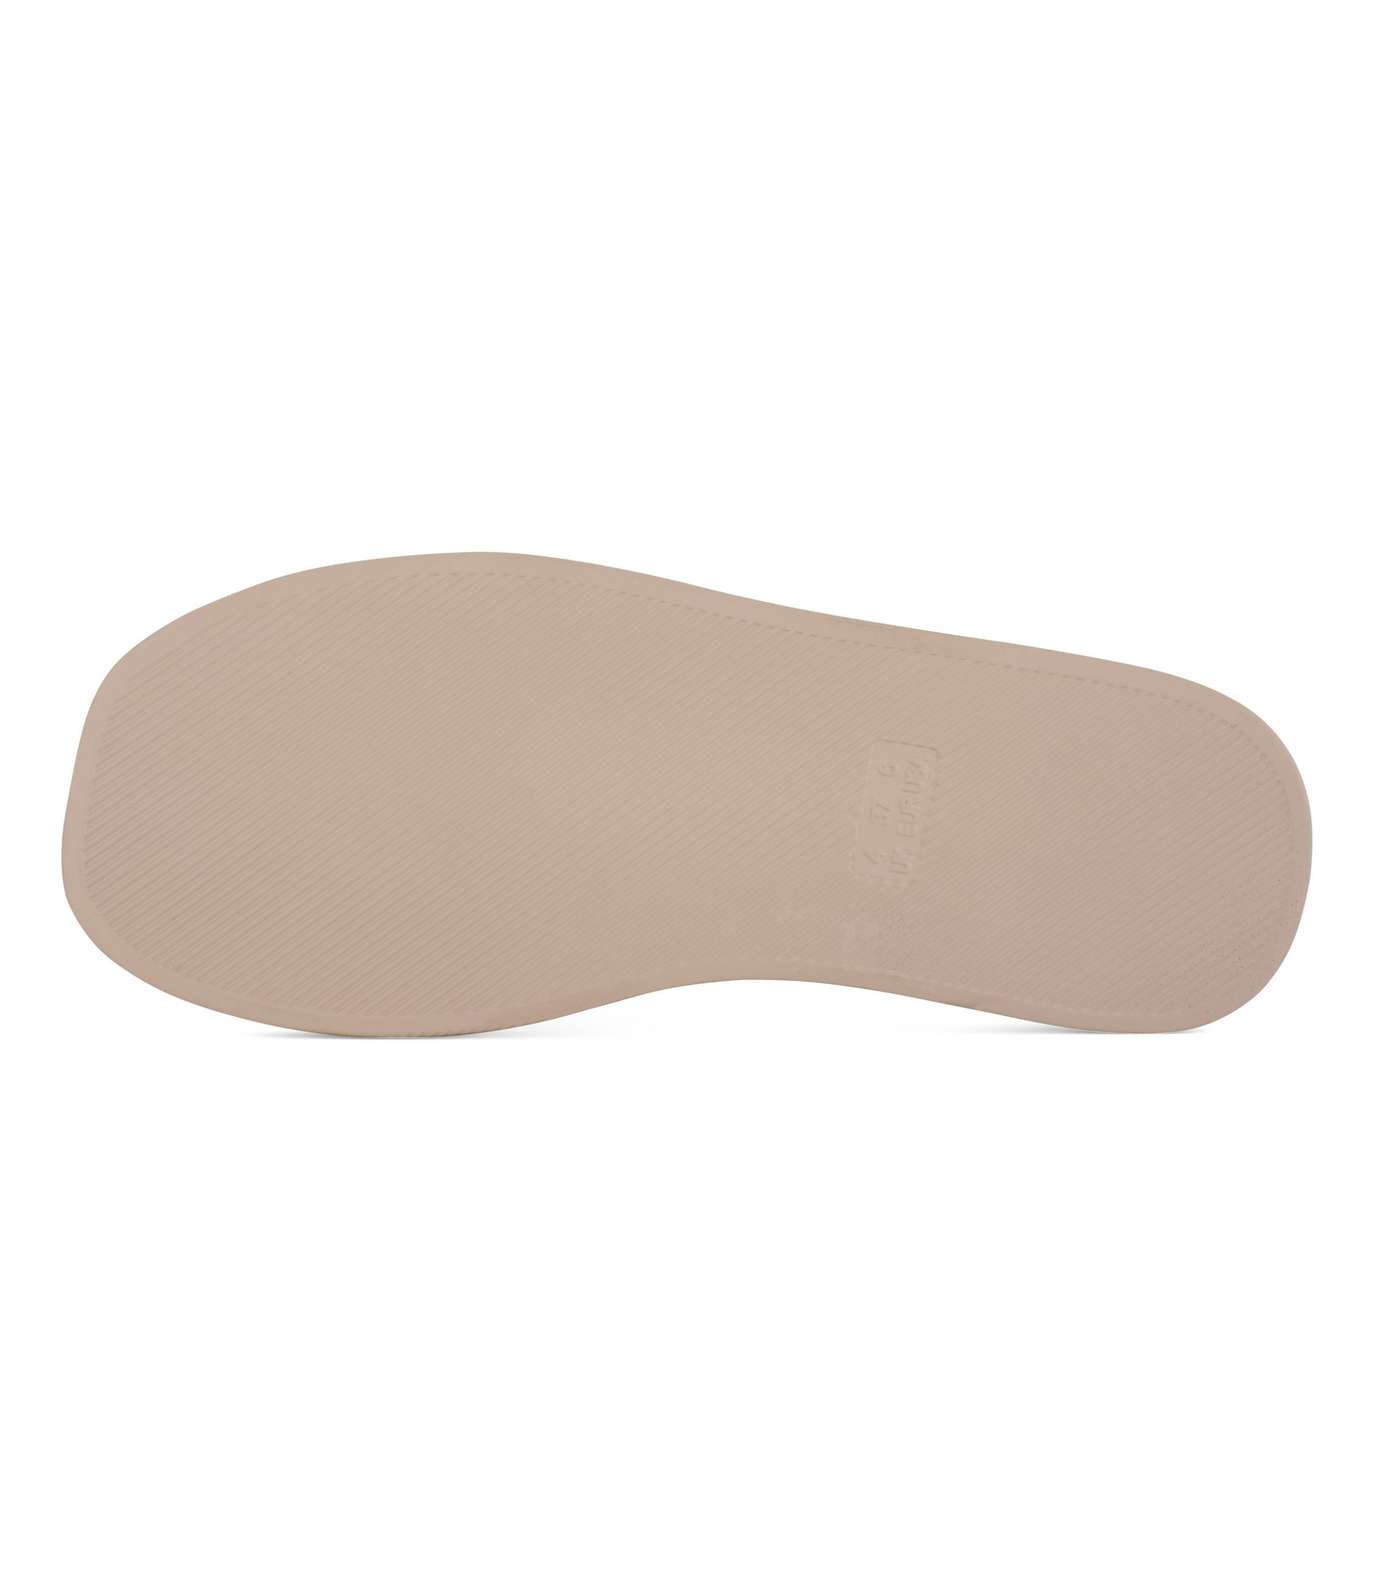 South Beach Cream Leather-Look Chunky Flip Flops Image 5